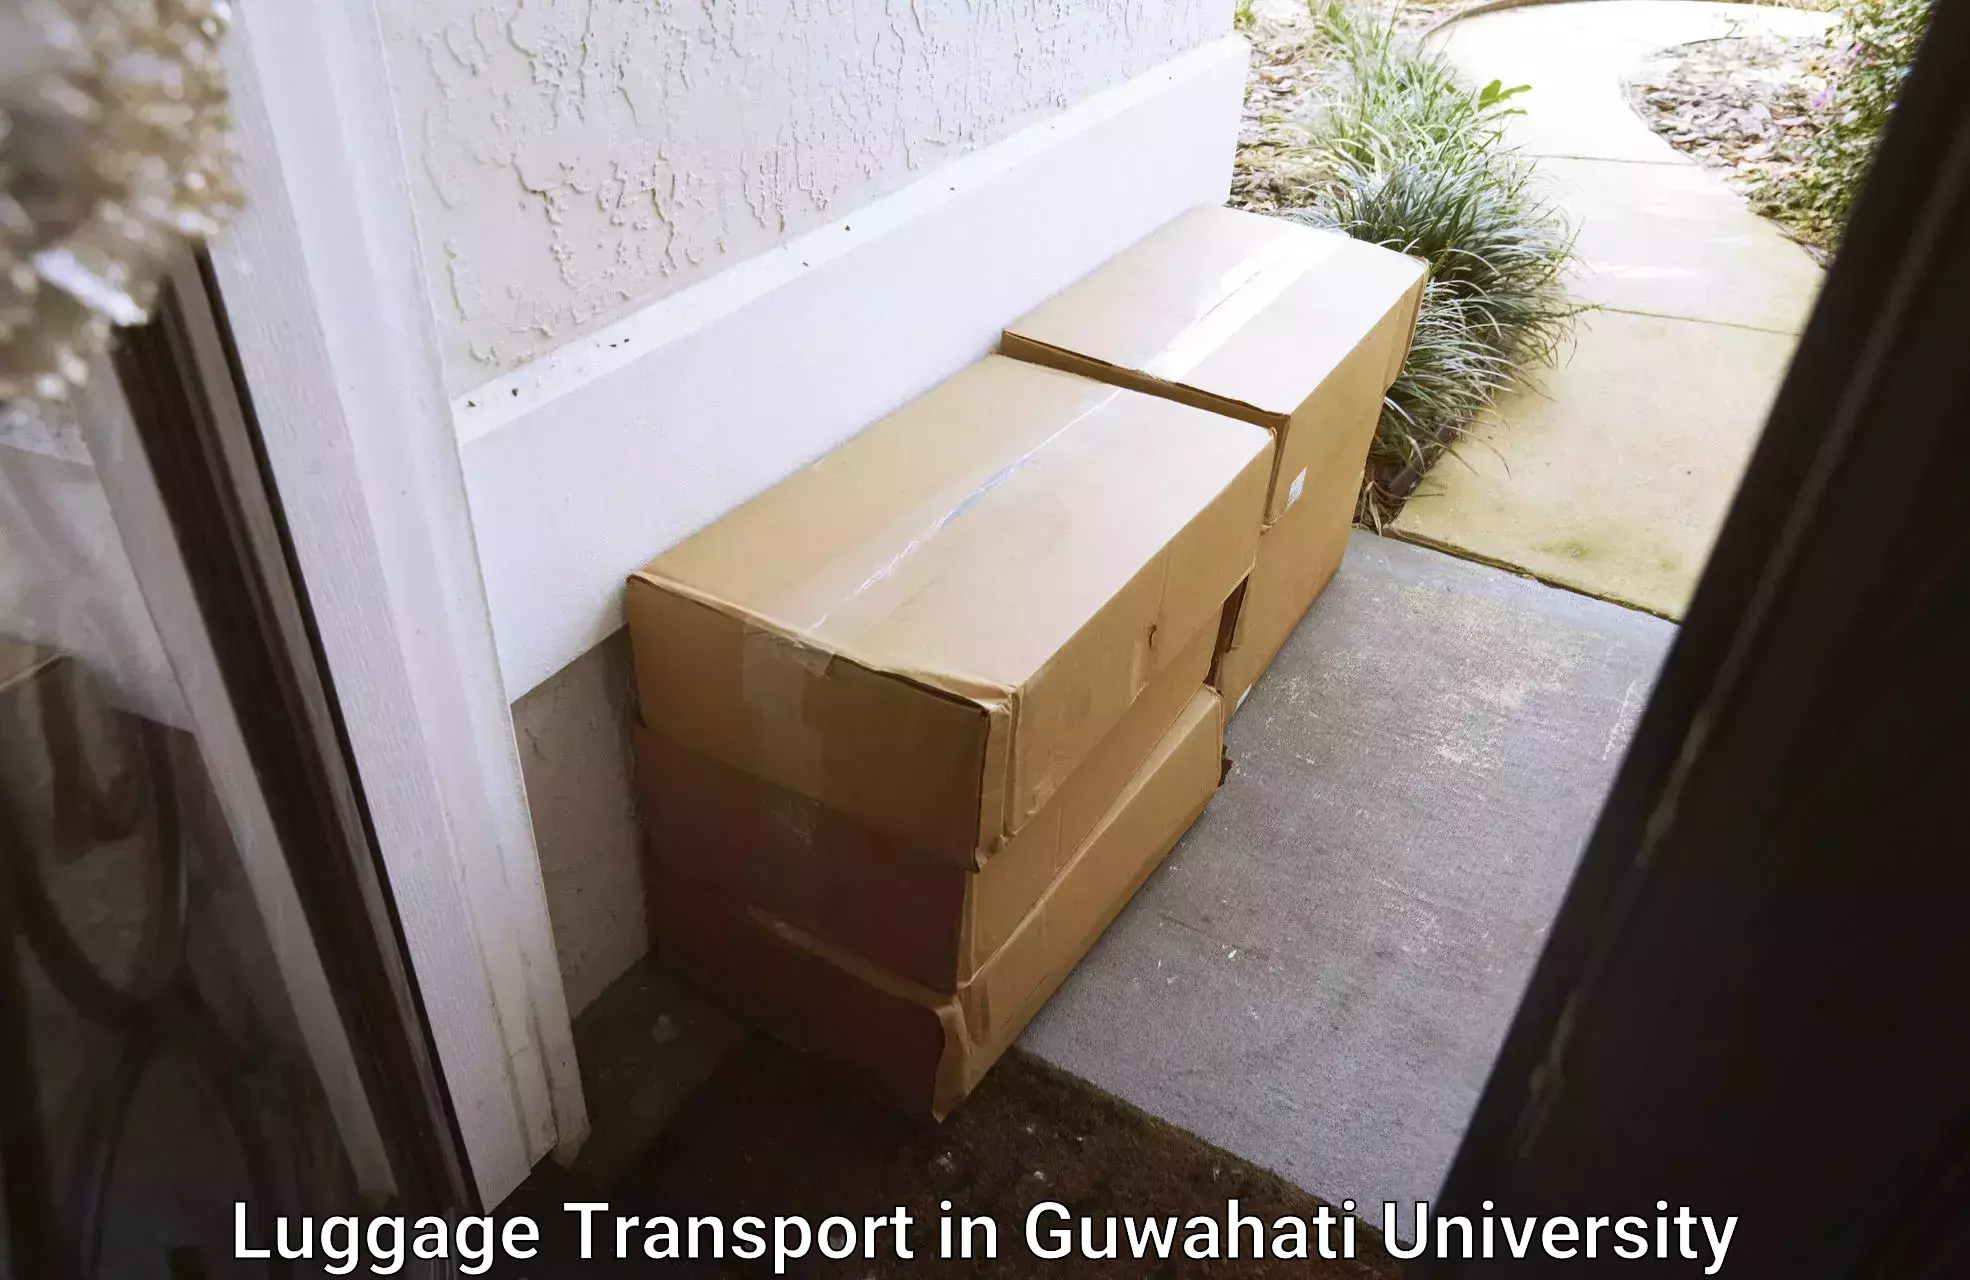 Efficient baggage transport in Guwahati University